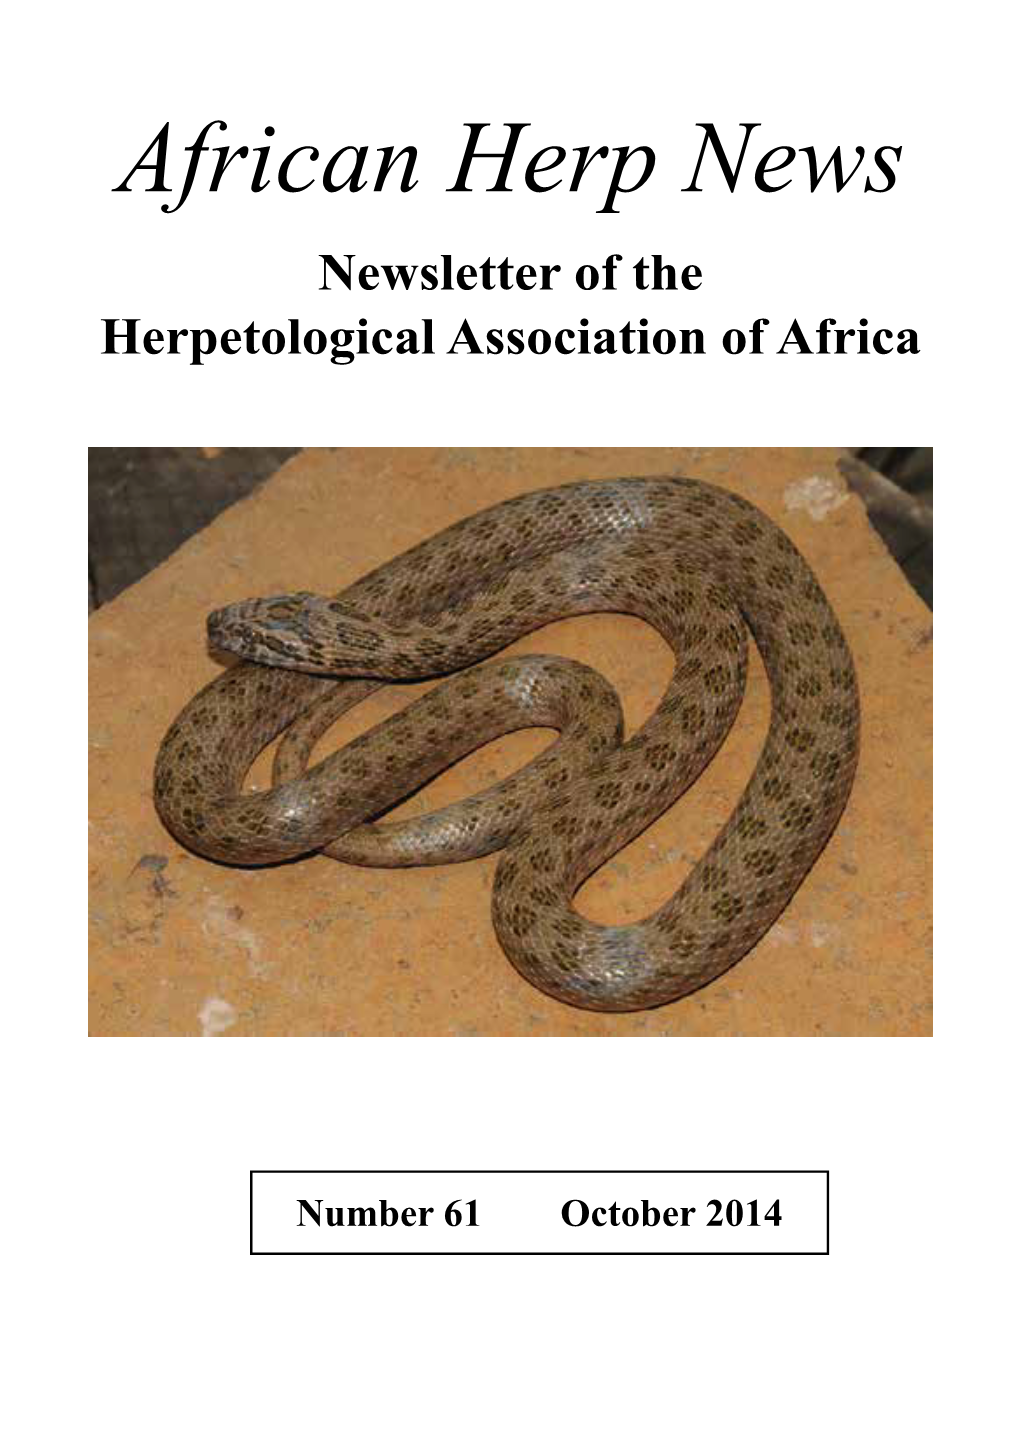 African Herp News Newsletter of the Herpetological Association of Africa